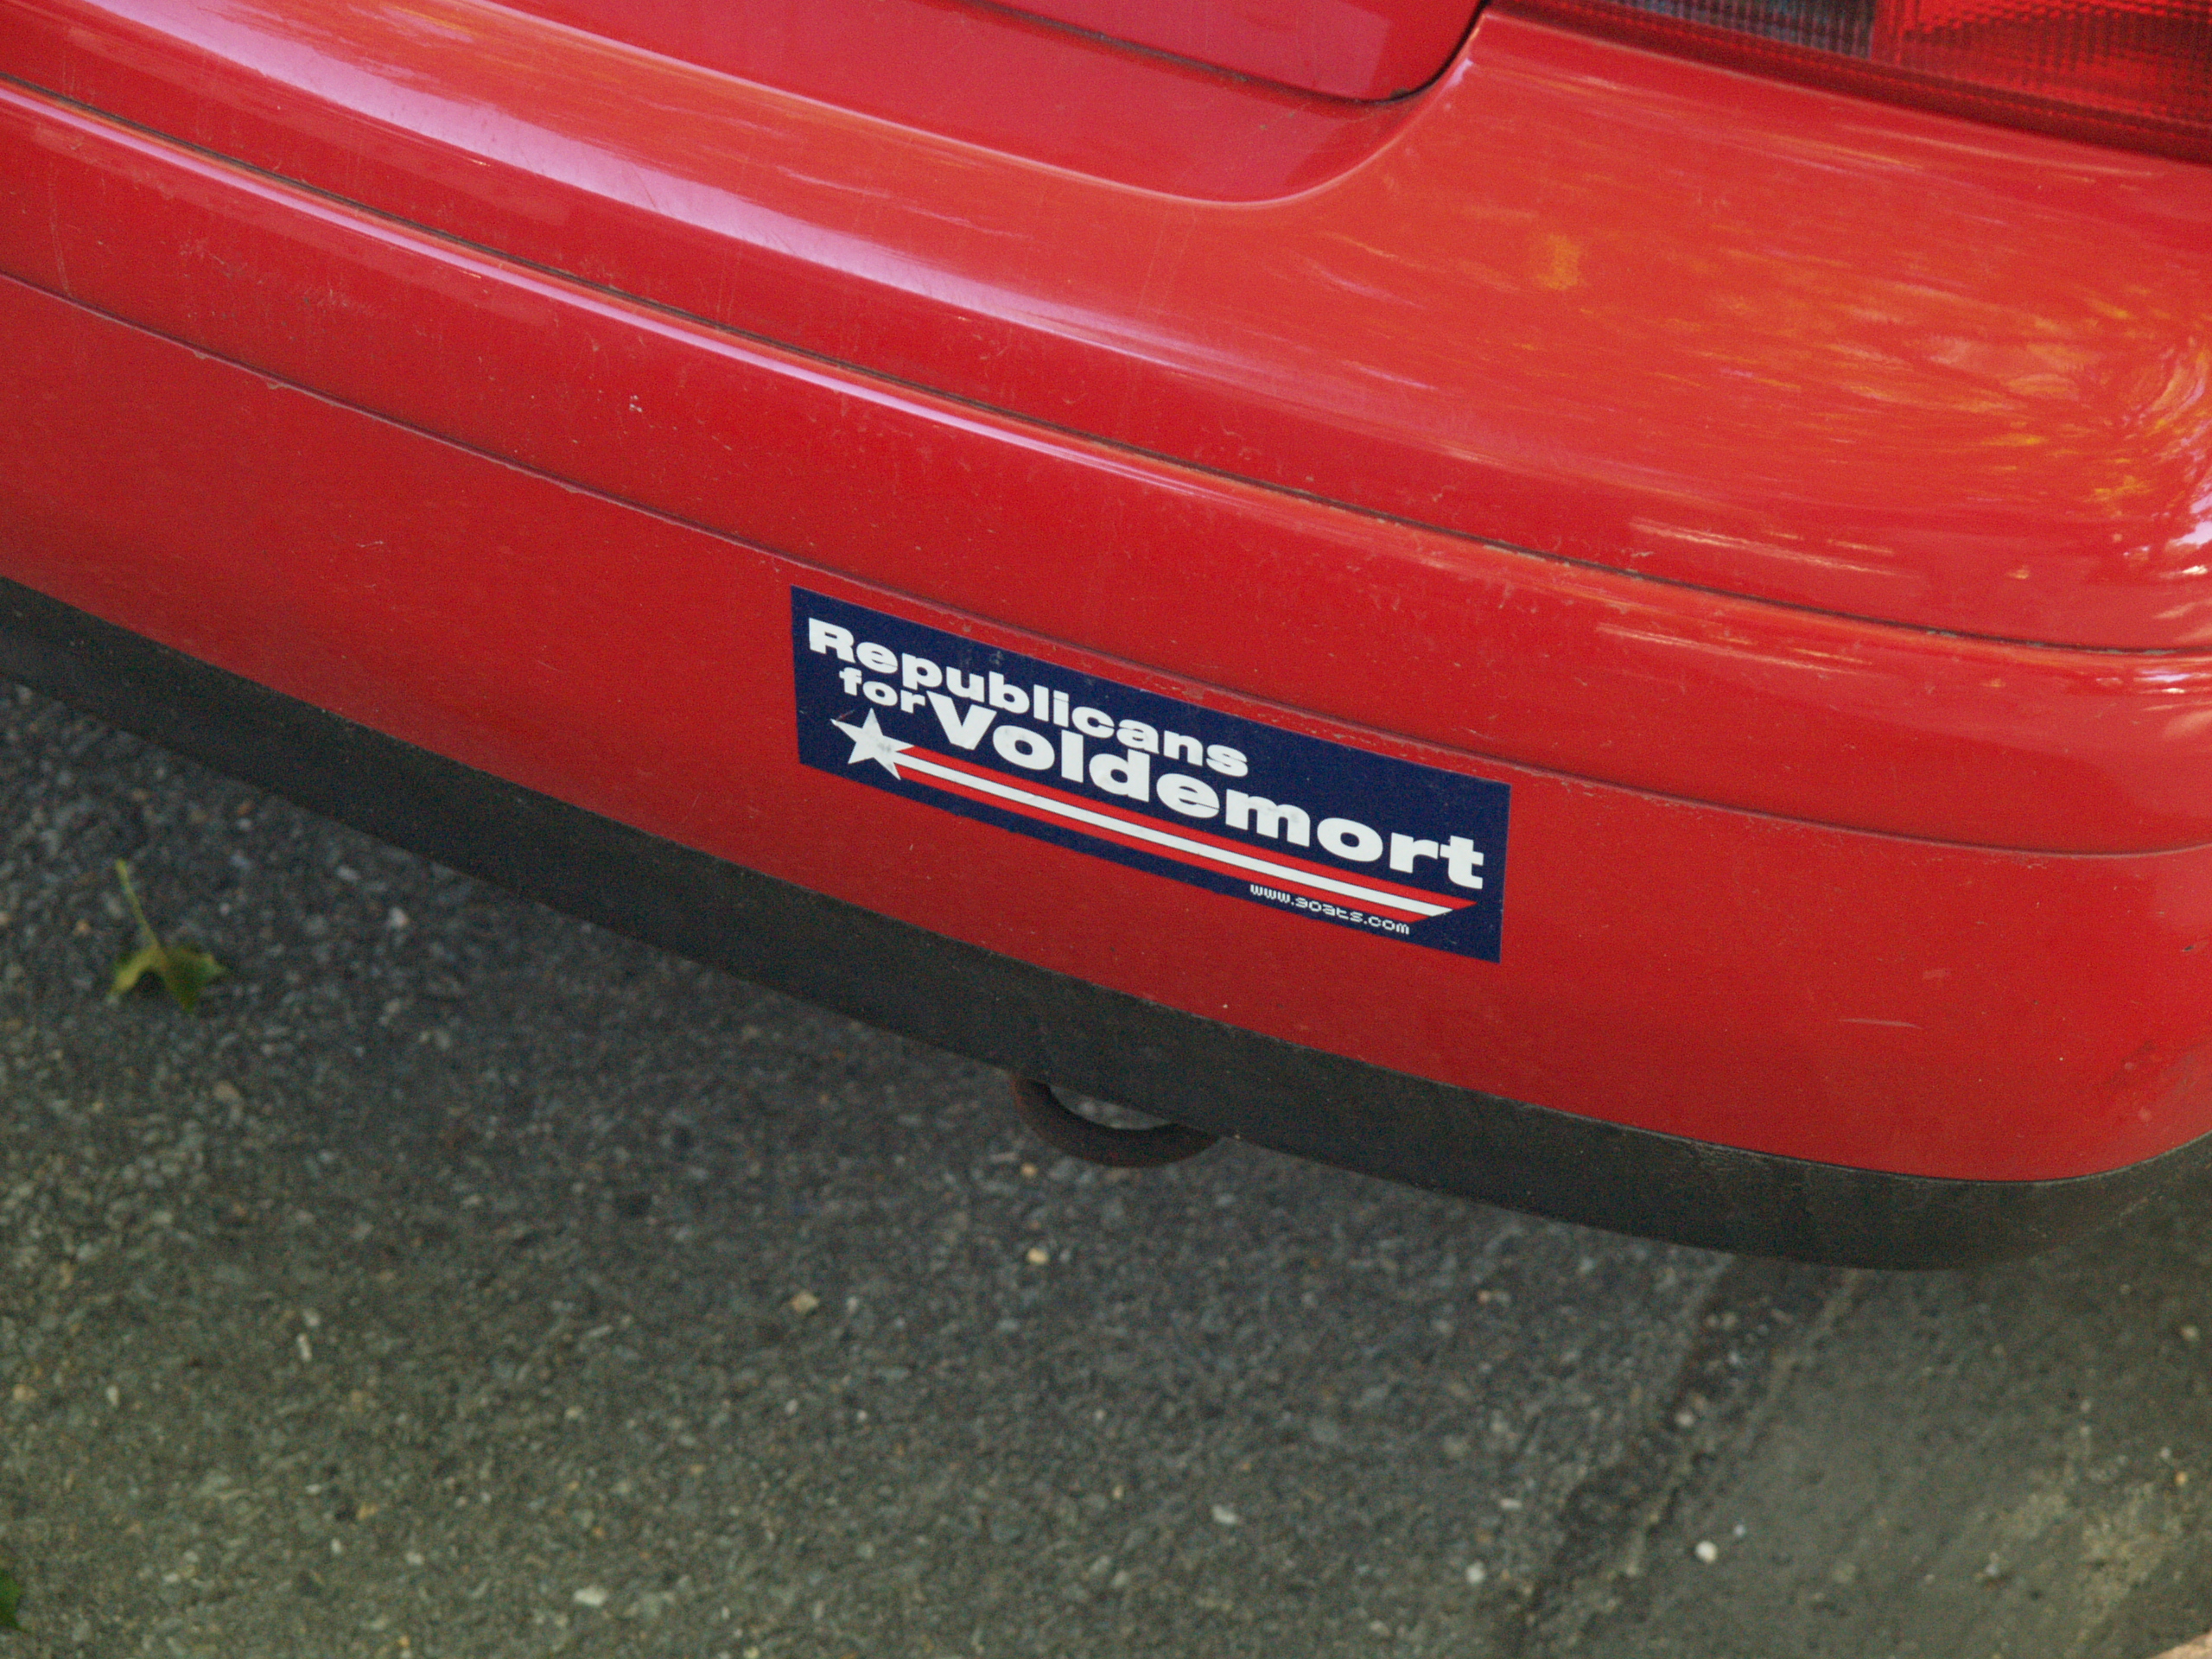 Democratic bumper sticker from 2004